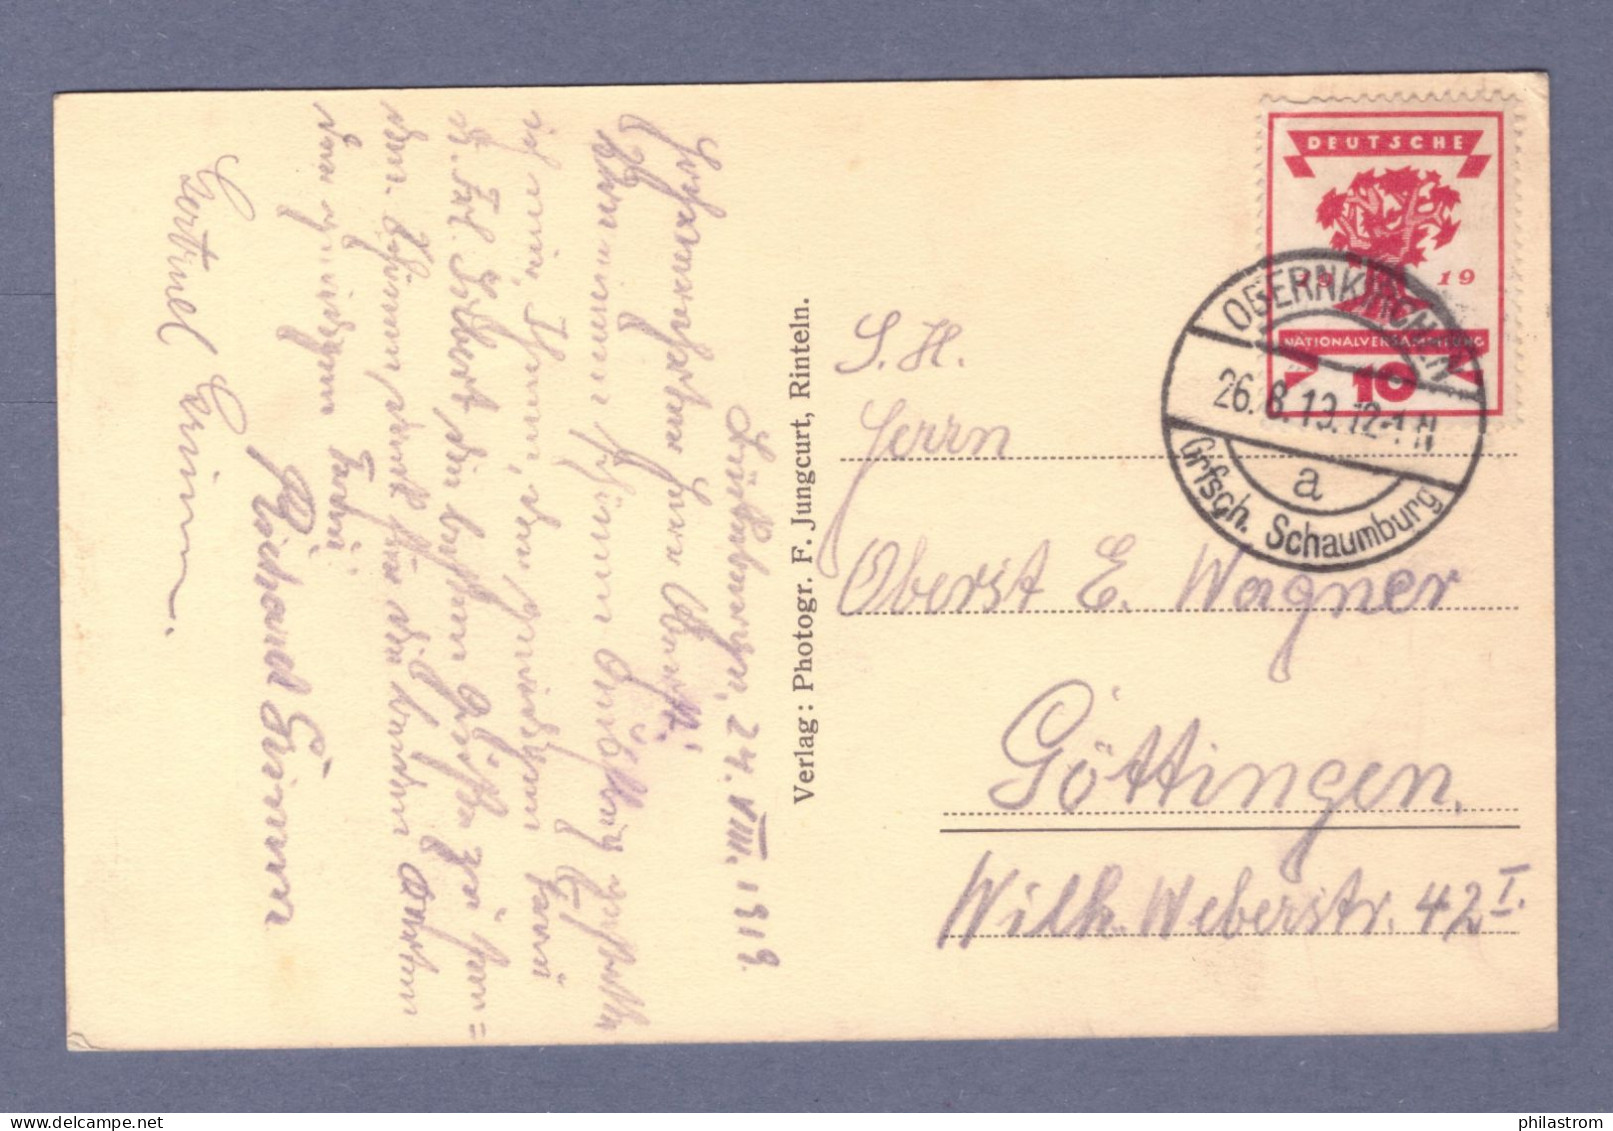 Weimar INFLA AK (Gasthaus Zum Bückeberg) Postkarte - Obekirchen Grfsch. Schaumburg 26.8.19 (CG13110-264) - Covers & Documents